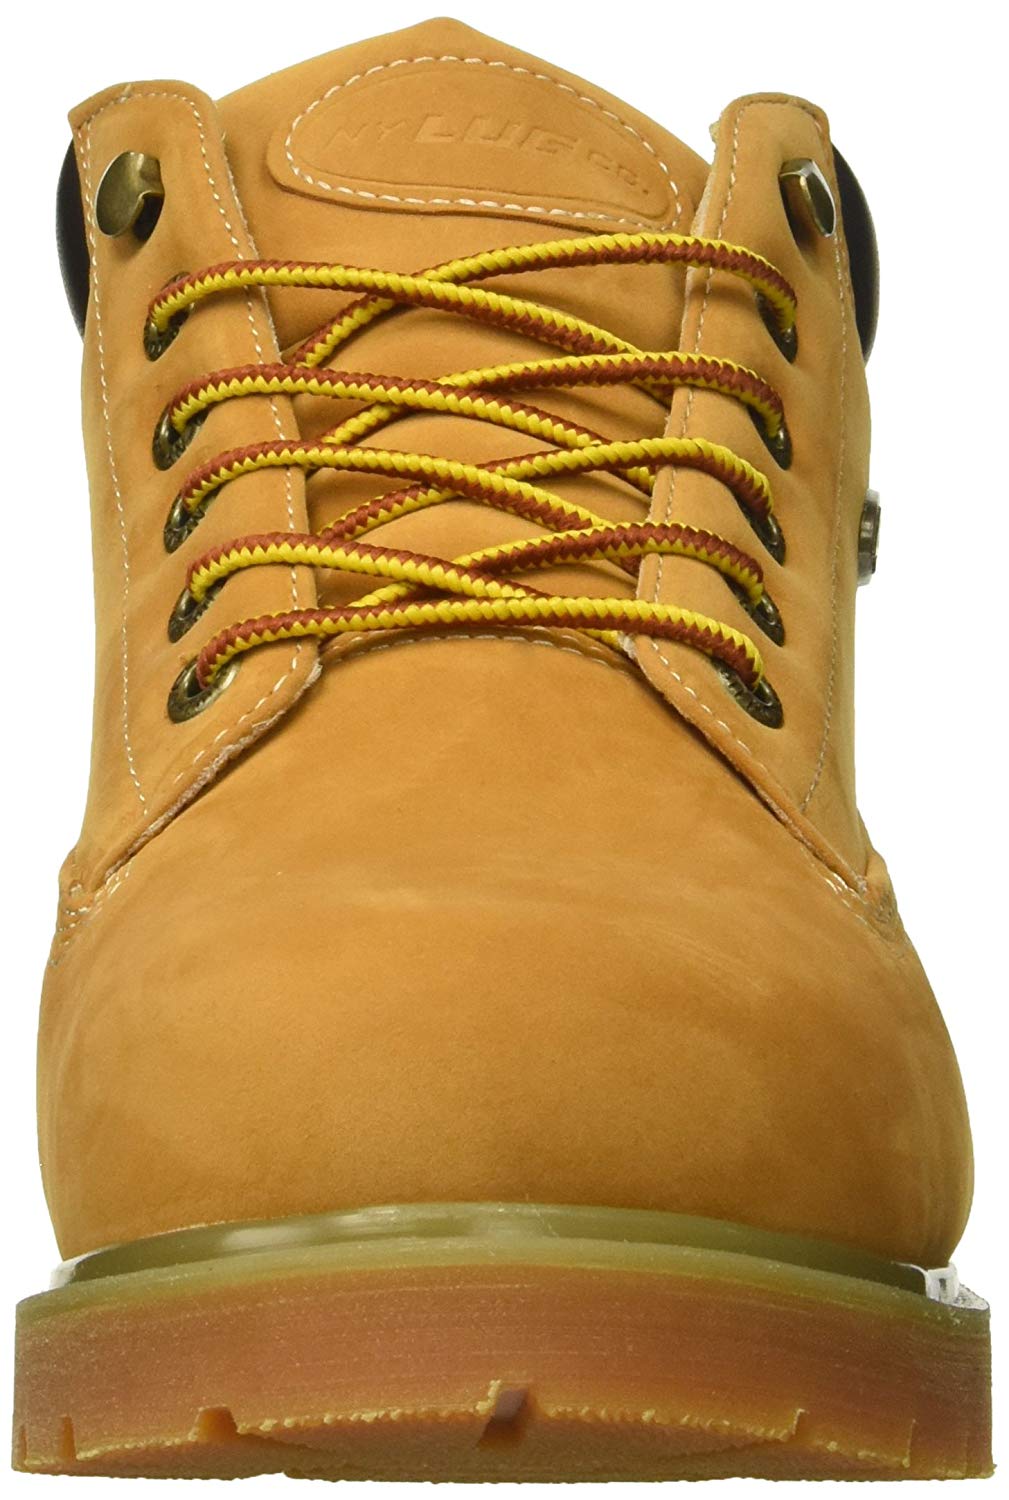 Lugz Men's Shoes Drifter Mid steel toe, Golden Wheat/Bark/Tan/Gum, Size ...